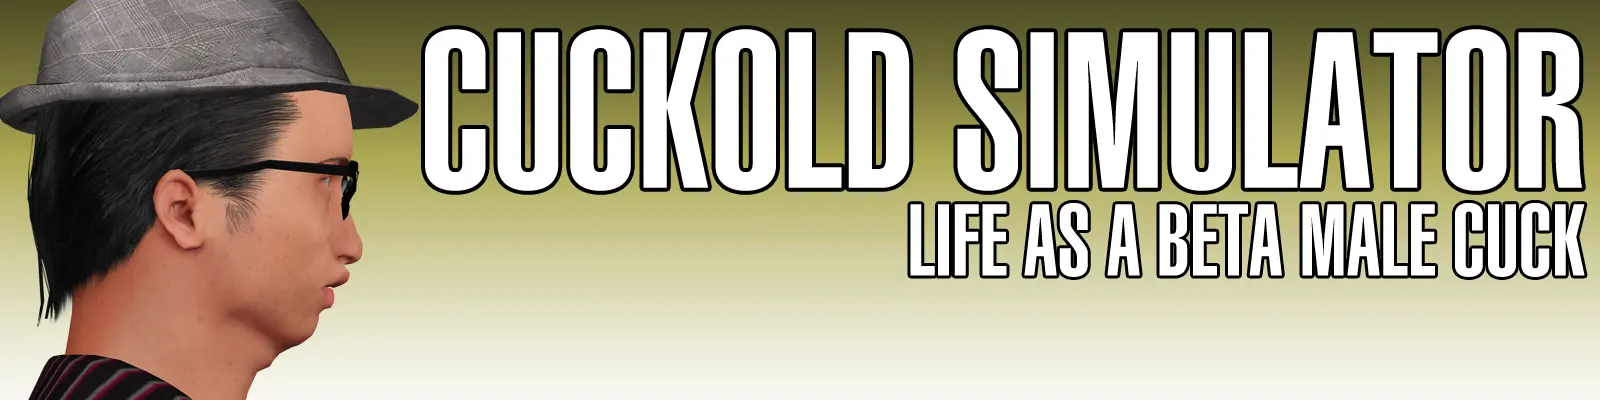 Cuckold Simulator: Life As a Beta Male Cuck main image